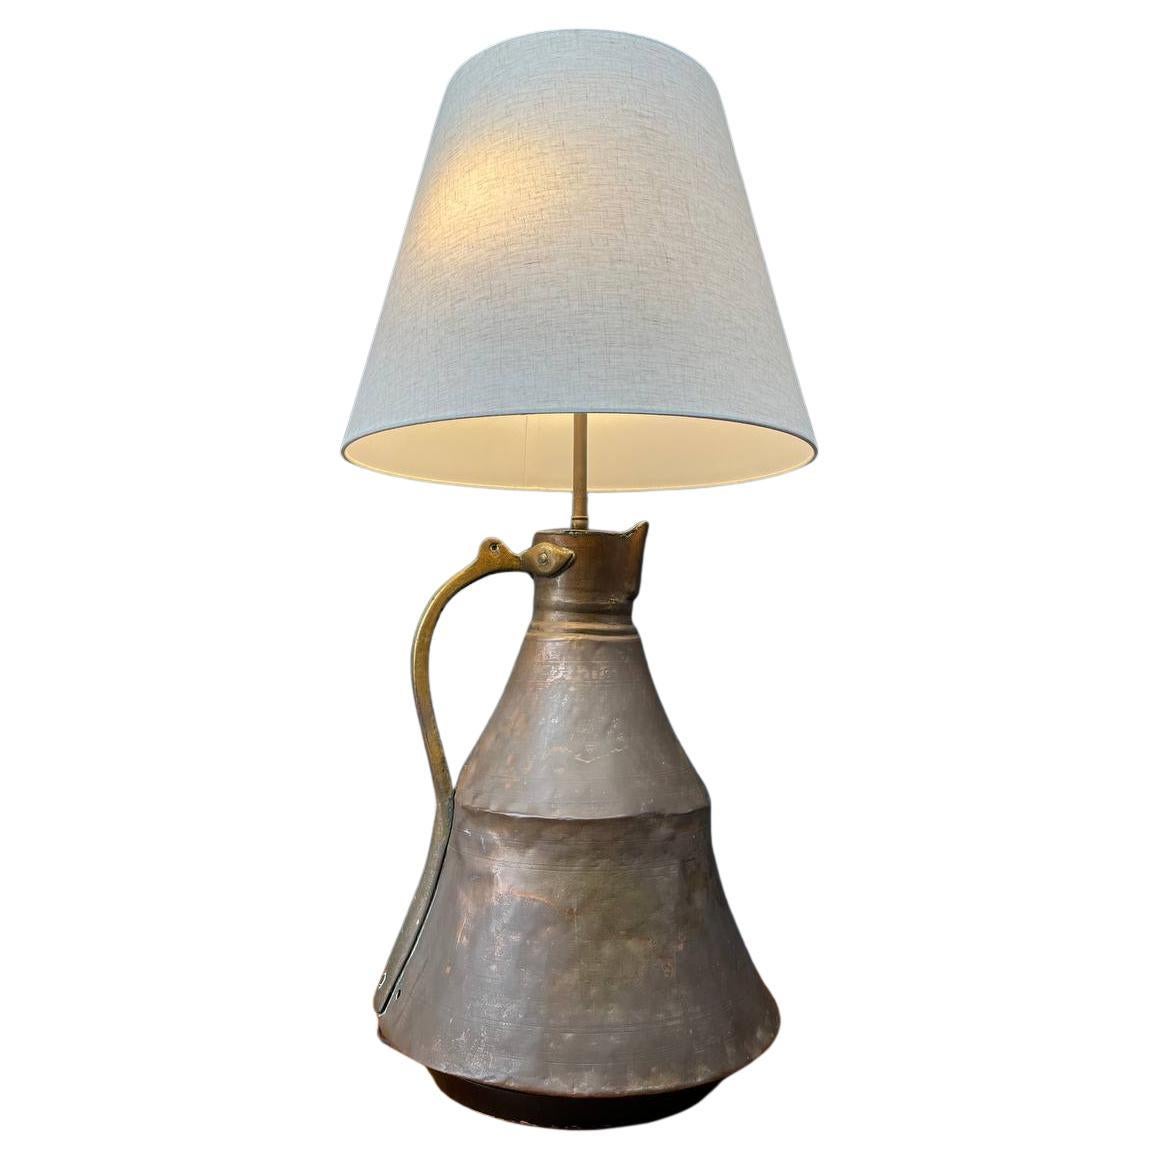 Antique Farmhouse Copper & Brass Pitcher Table Lamp For Sale